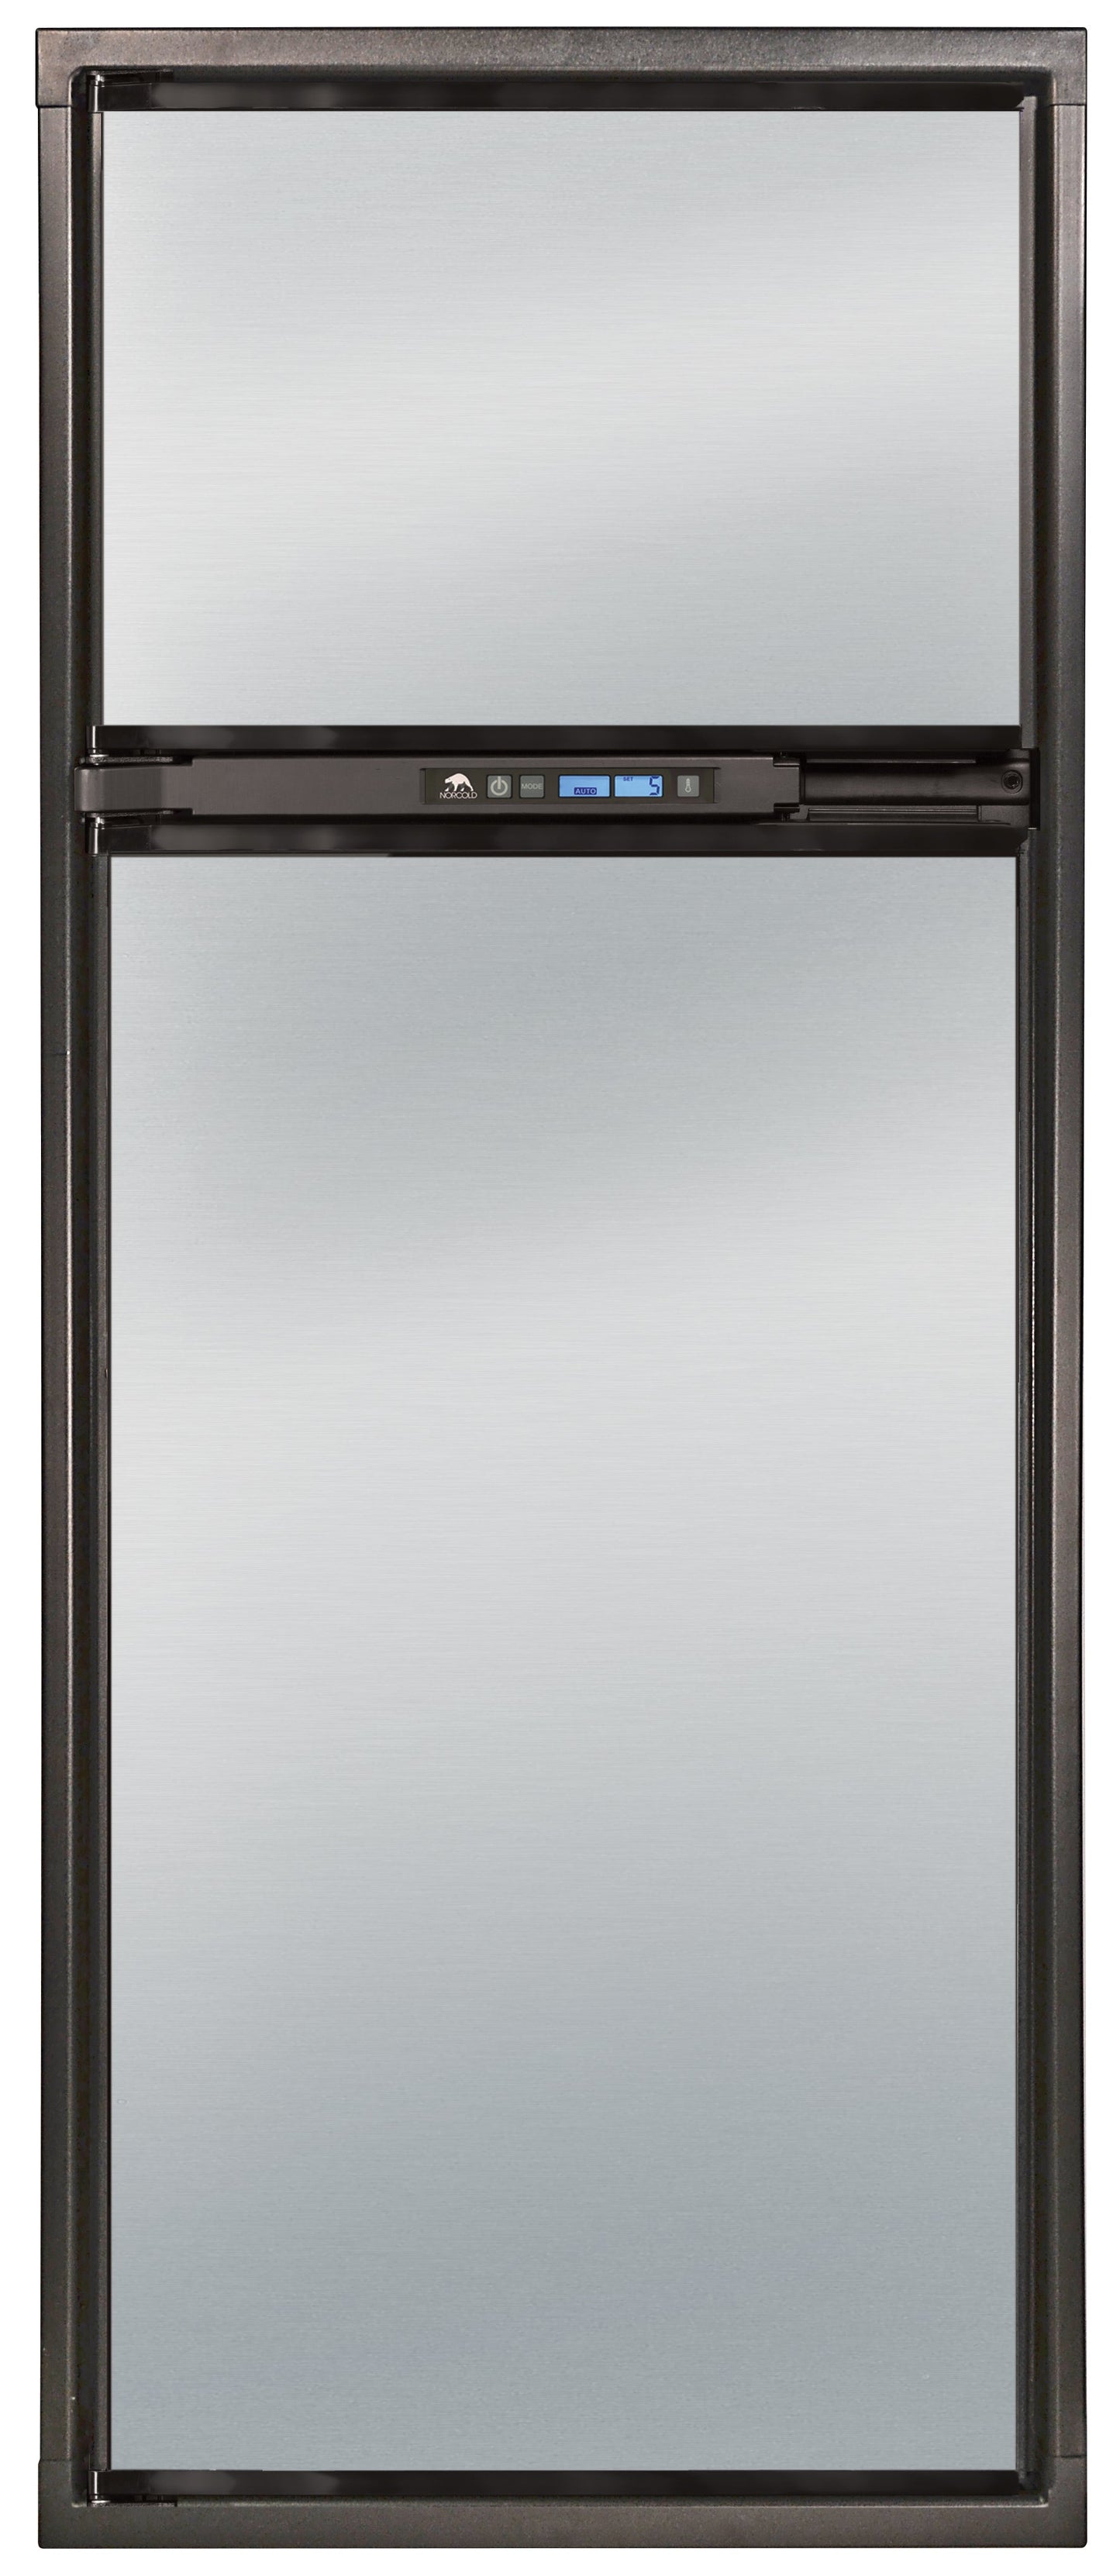 Norcold Polar AC/LP (2-way) Refrigerator With Freezer, 10 cu. ft - N6DNA10LXR